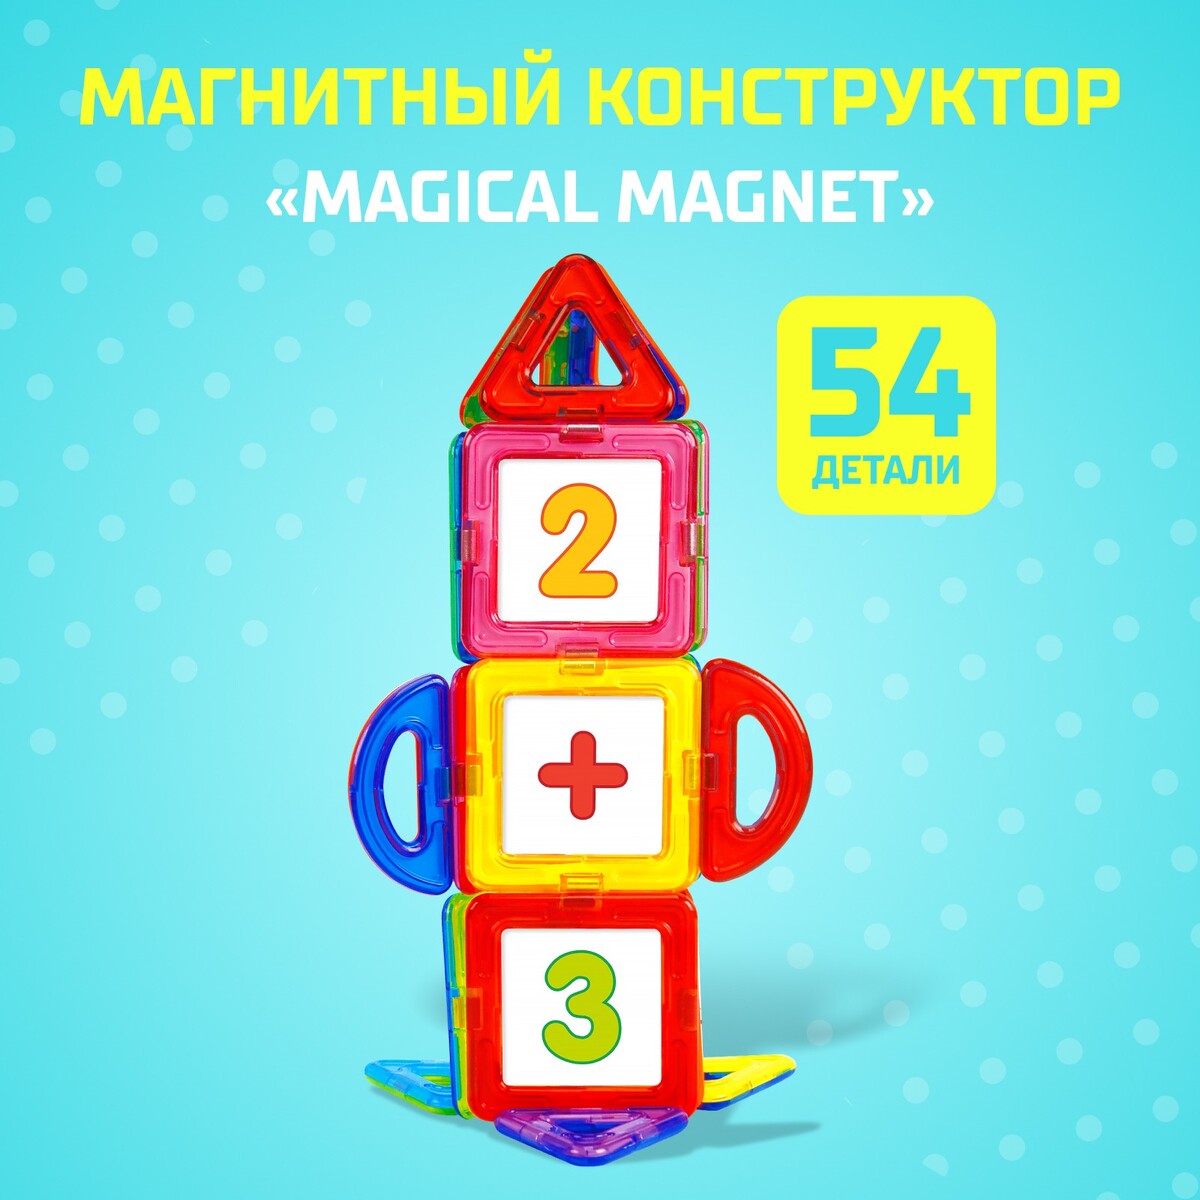   magical magnet, 54 ,  